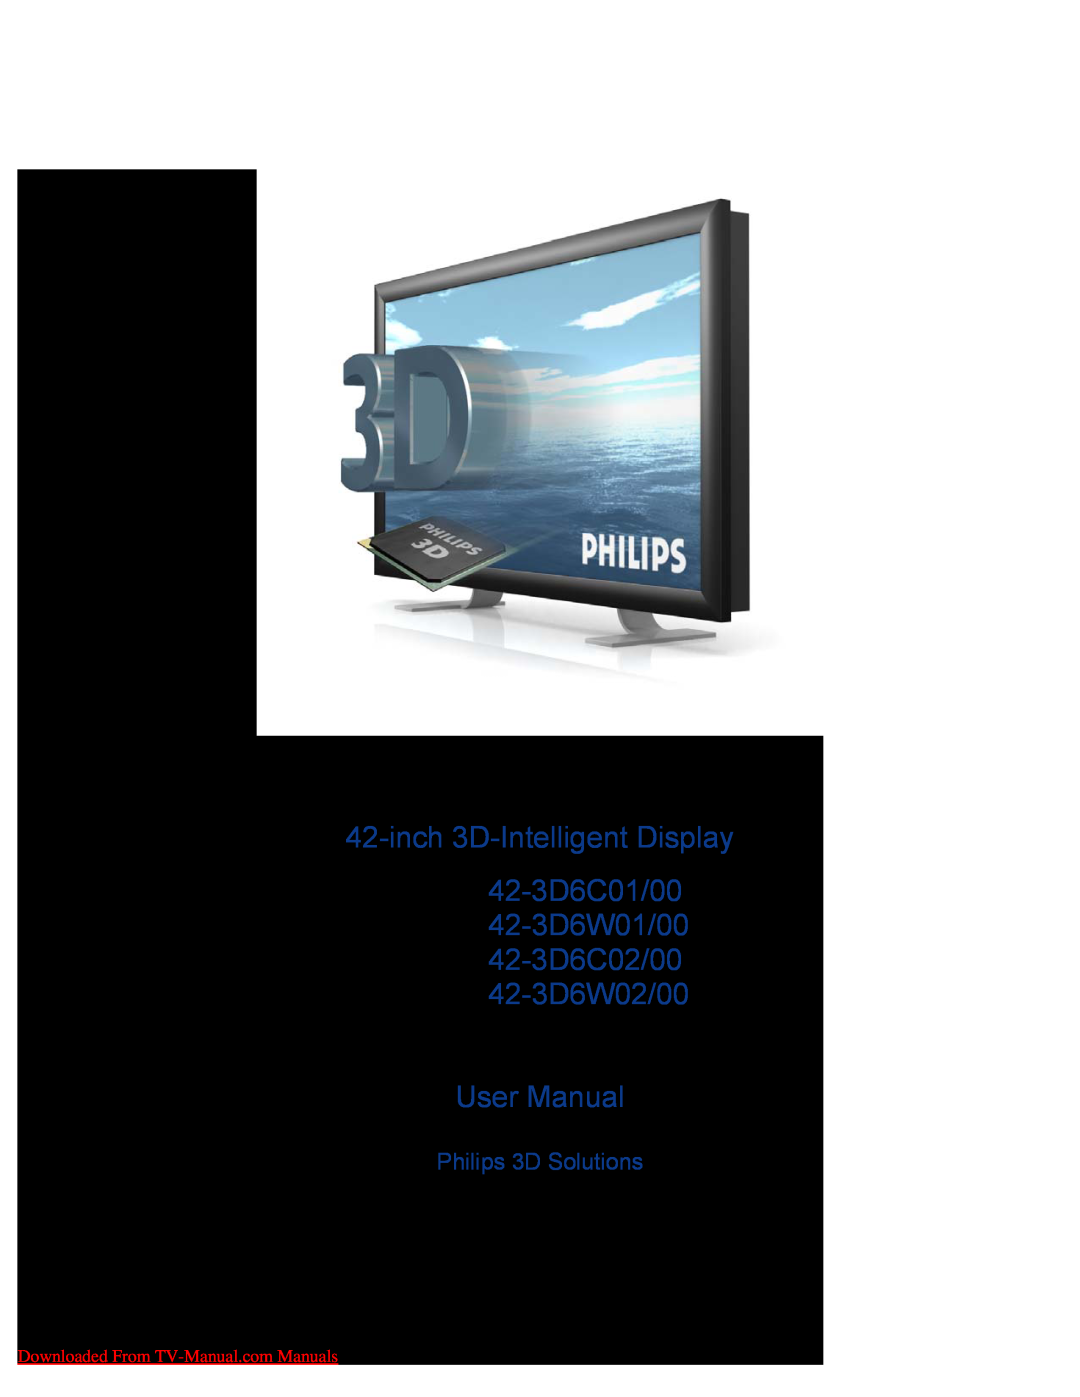 Philips user manual inch 3D-IntelligentDisplay 42-3D6C01/00, 42-3D6W01/00 42-3D6C02/00 42-3D6W02/00, User Manual 